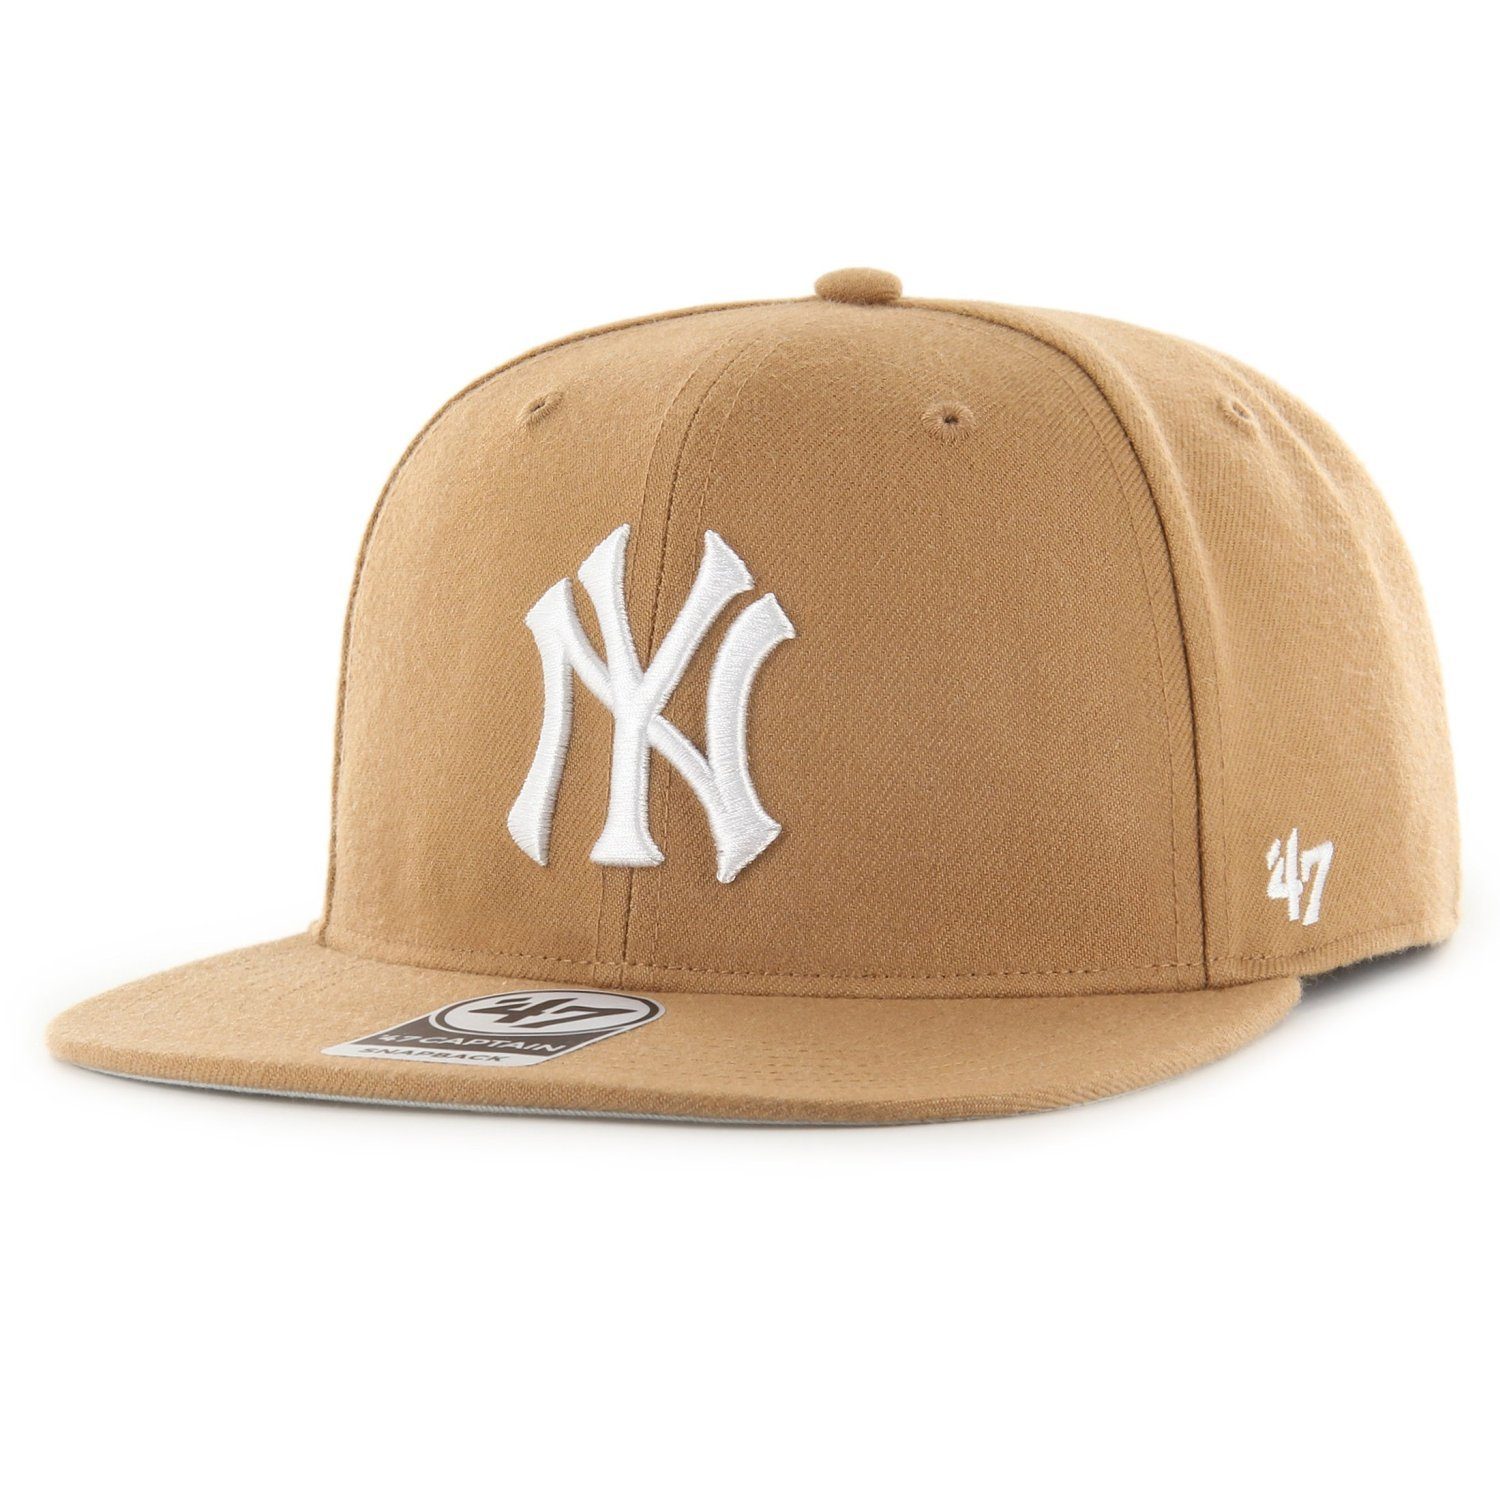 Yankees '47 Snapback SHOT NO Cap New Brand York